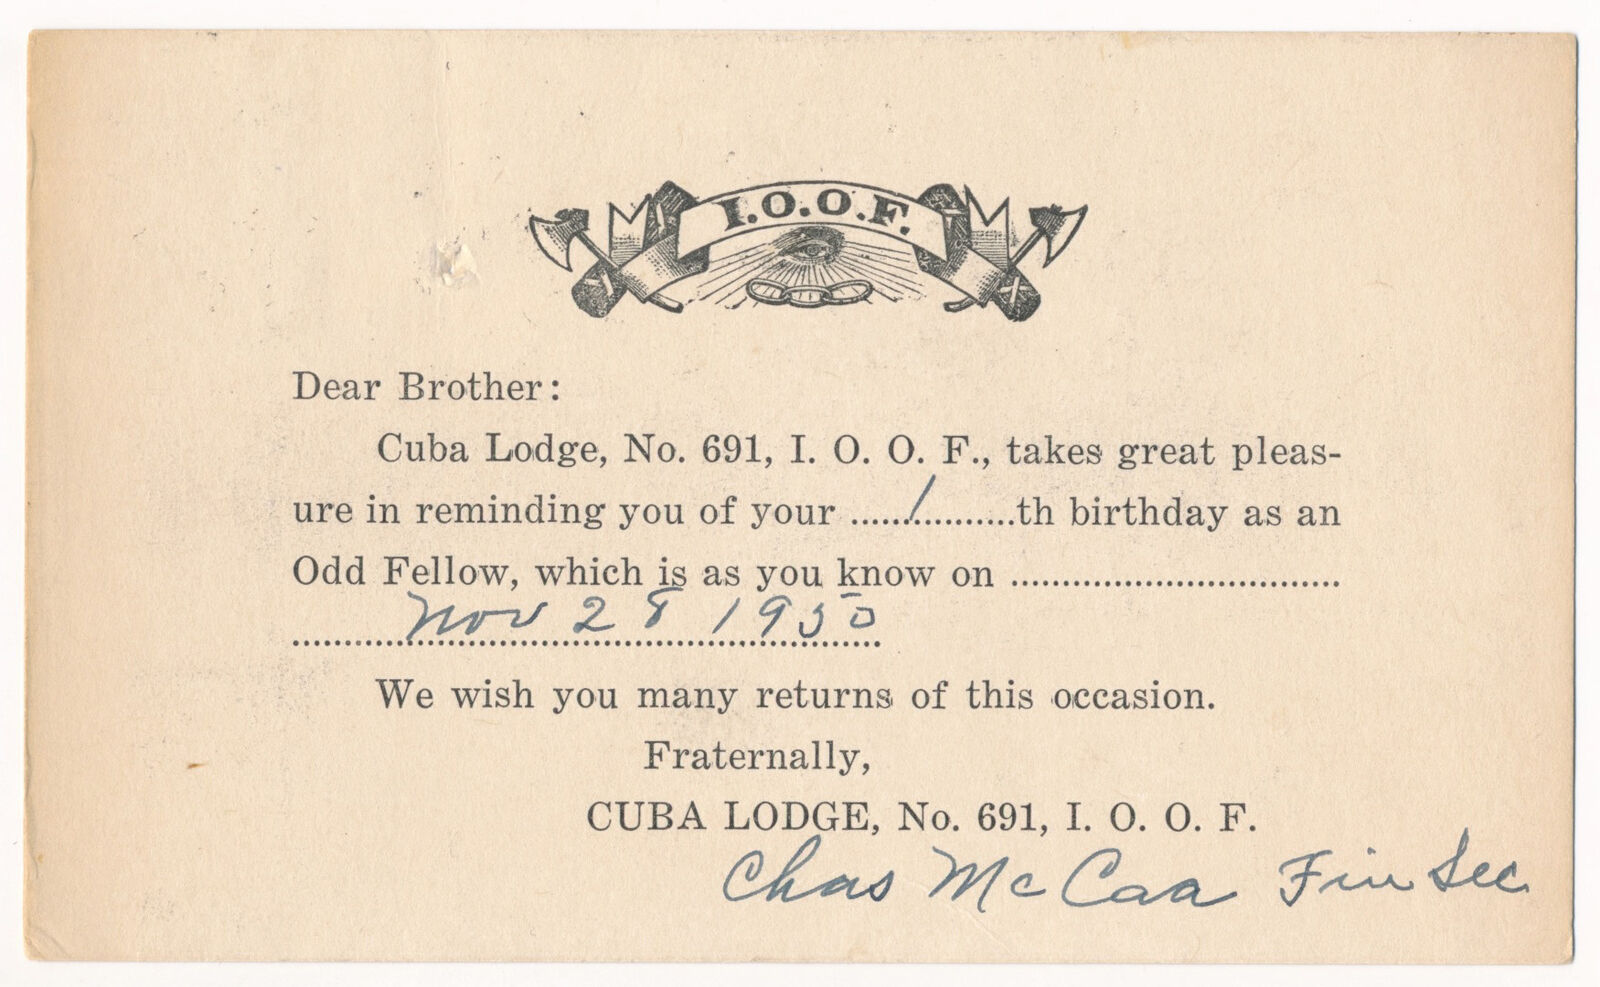 I.O.O.F. Odd Fellows - Lodge No. 691, Cuba, New York 1950